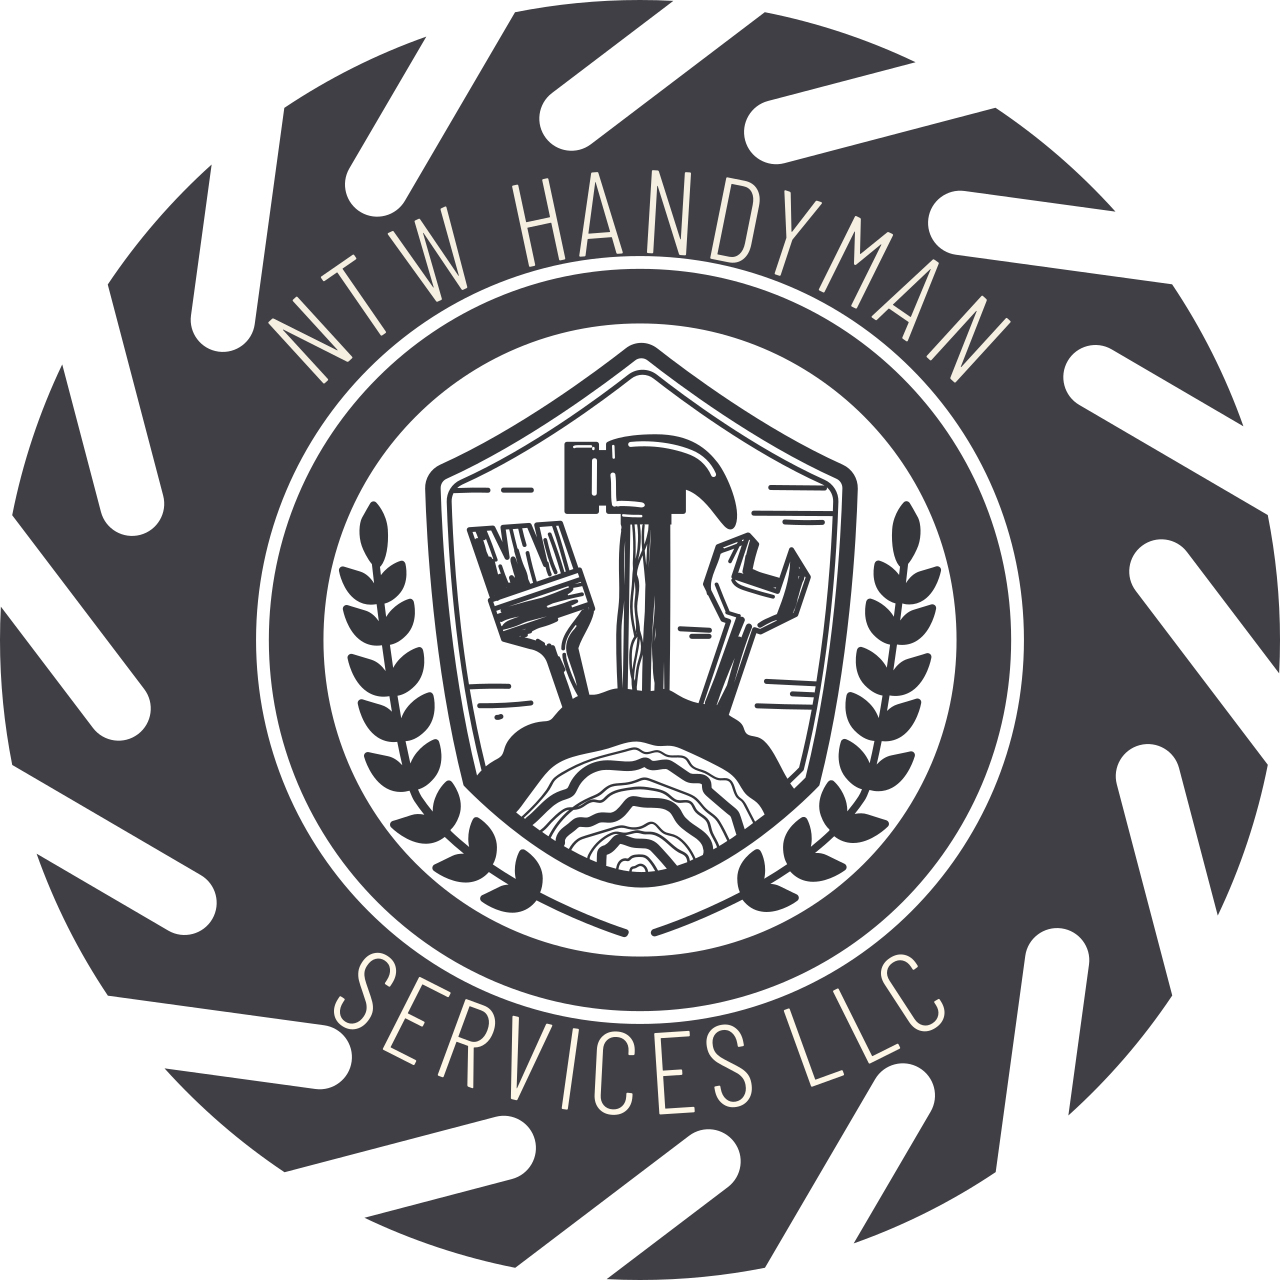 NTW HANDYMAN's logo